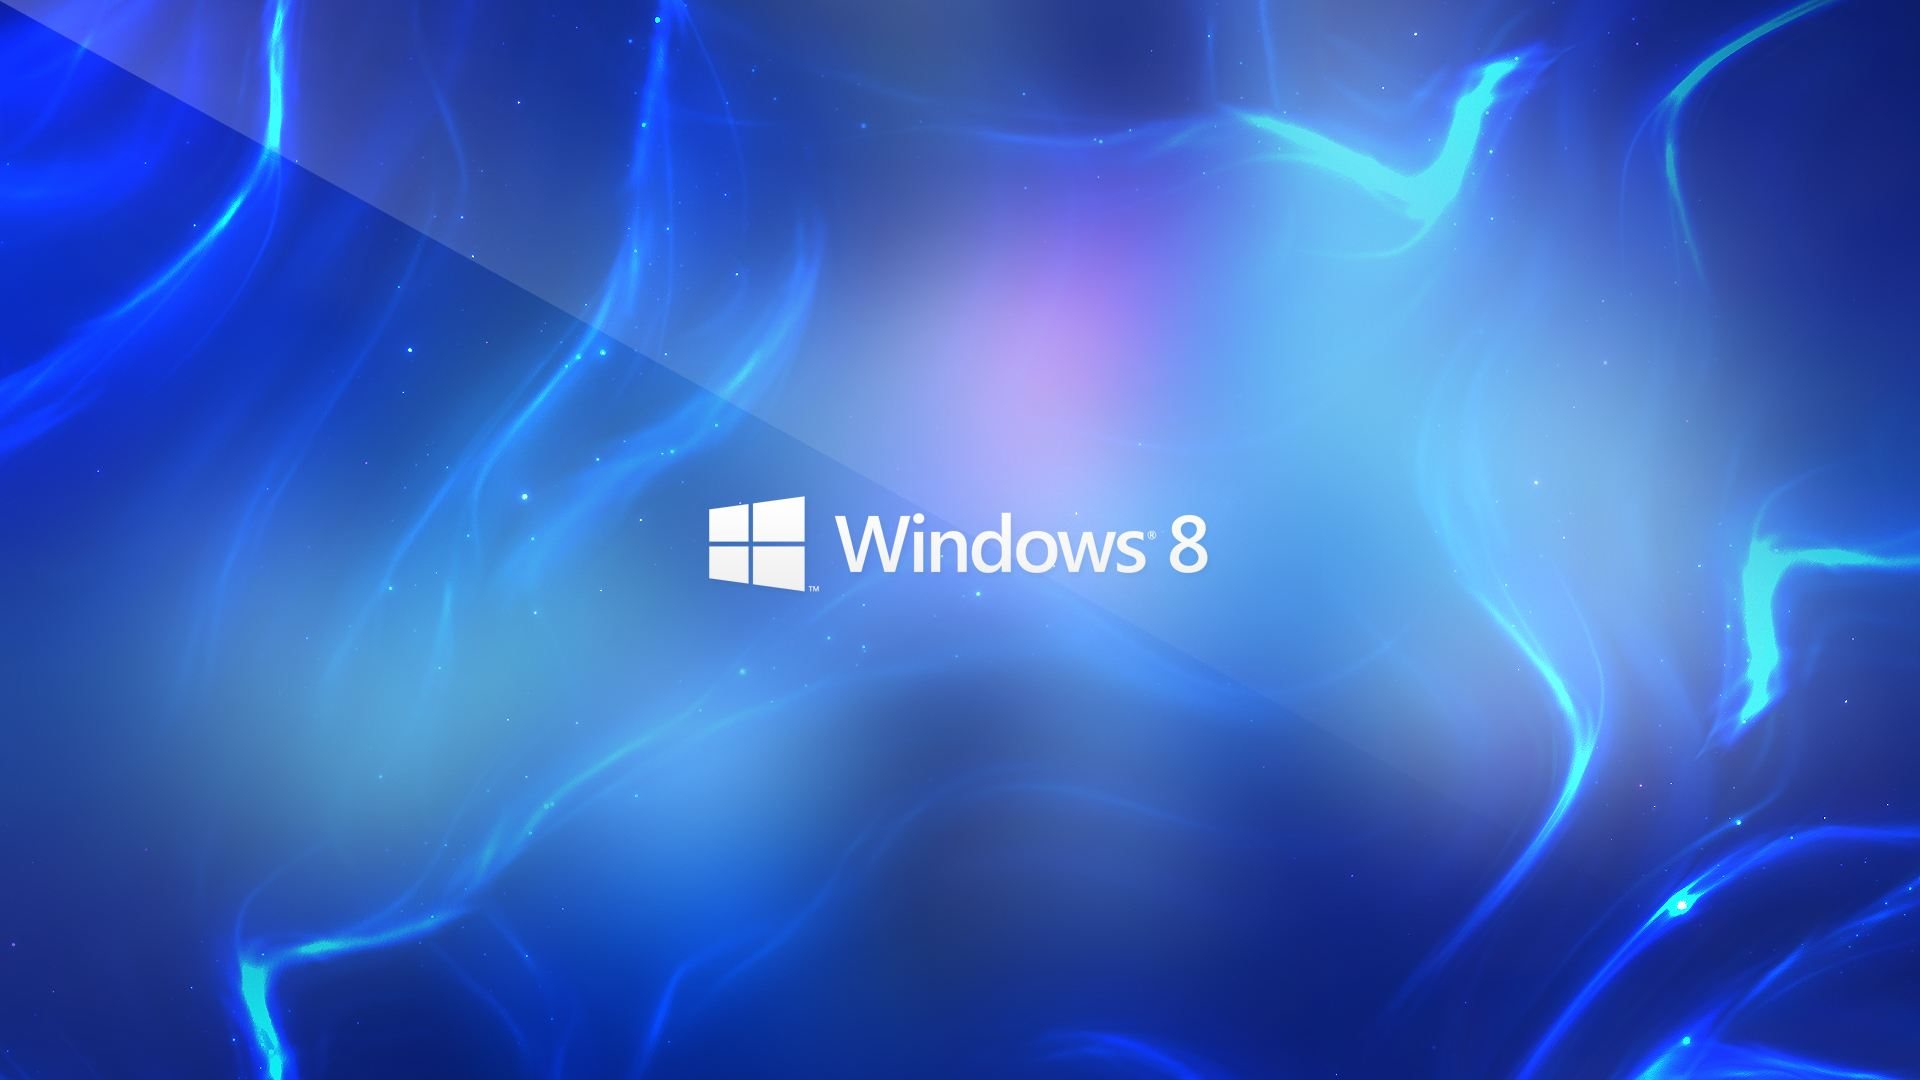 Microsoft Windows 8.1 HD Wallpaper Picture Image Free Download